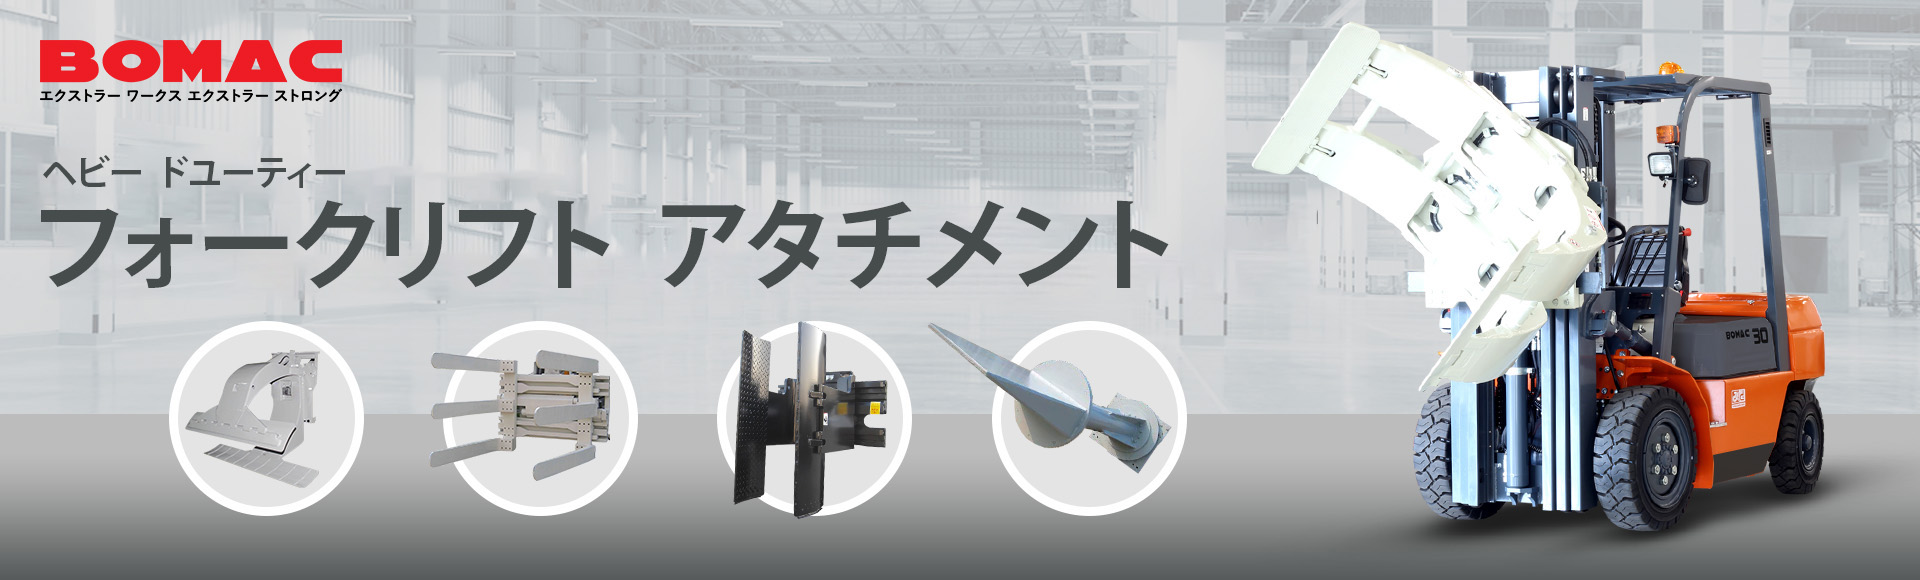 Banner Bomac Forklift Japan Attachment Japan Ver